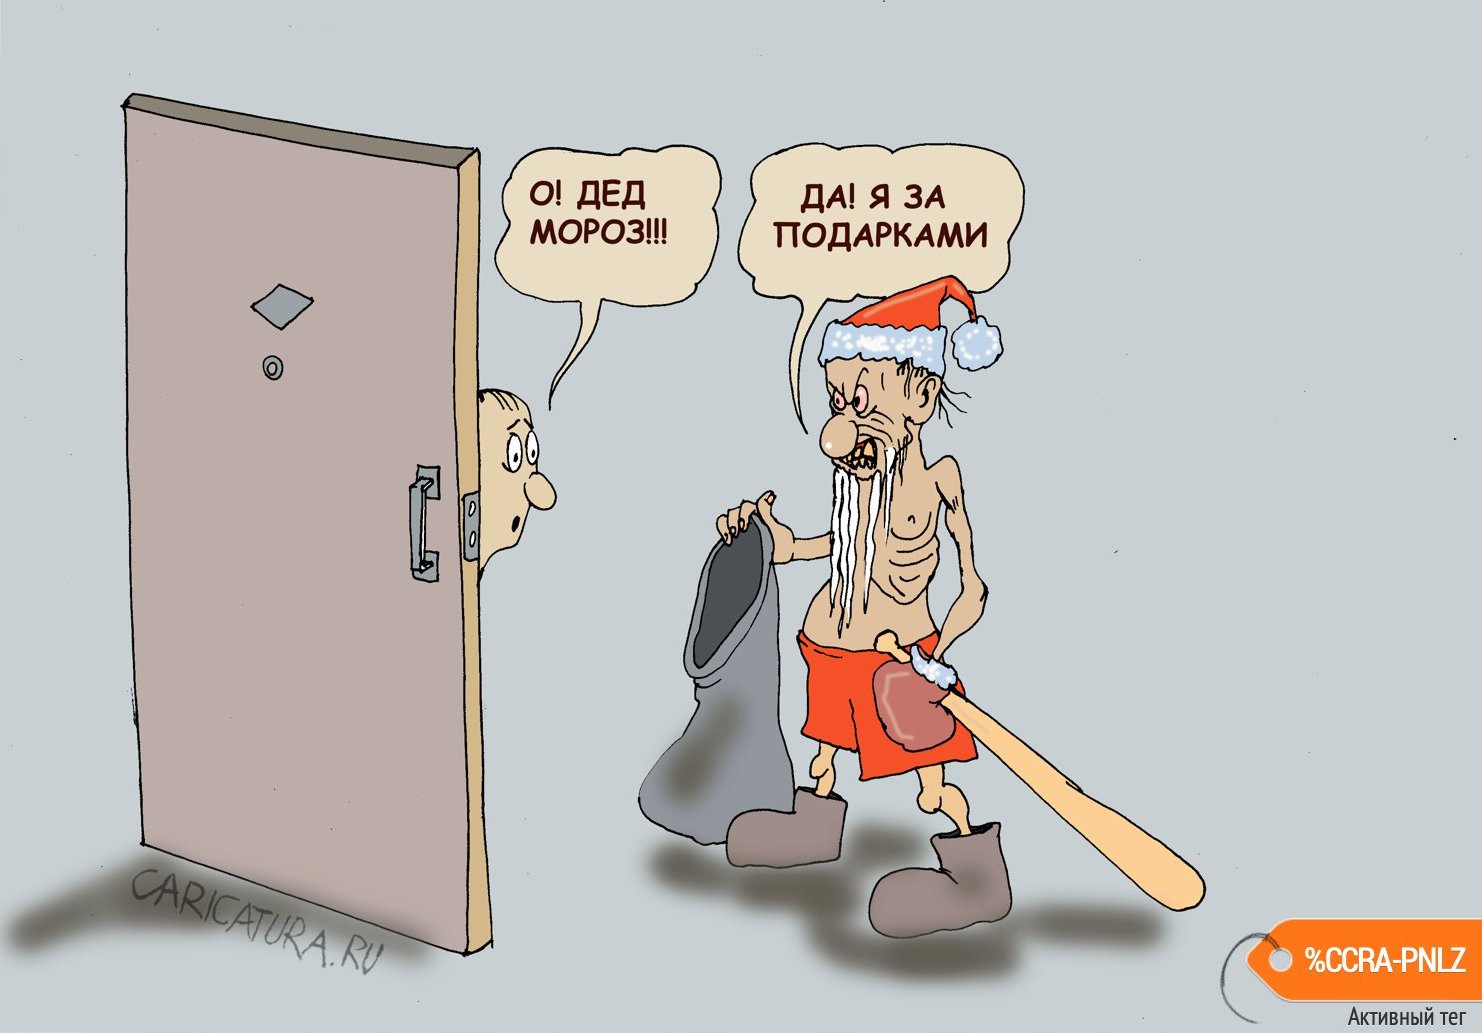 Карикатура "За подарками", Булат Ирсаев